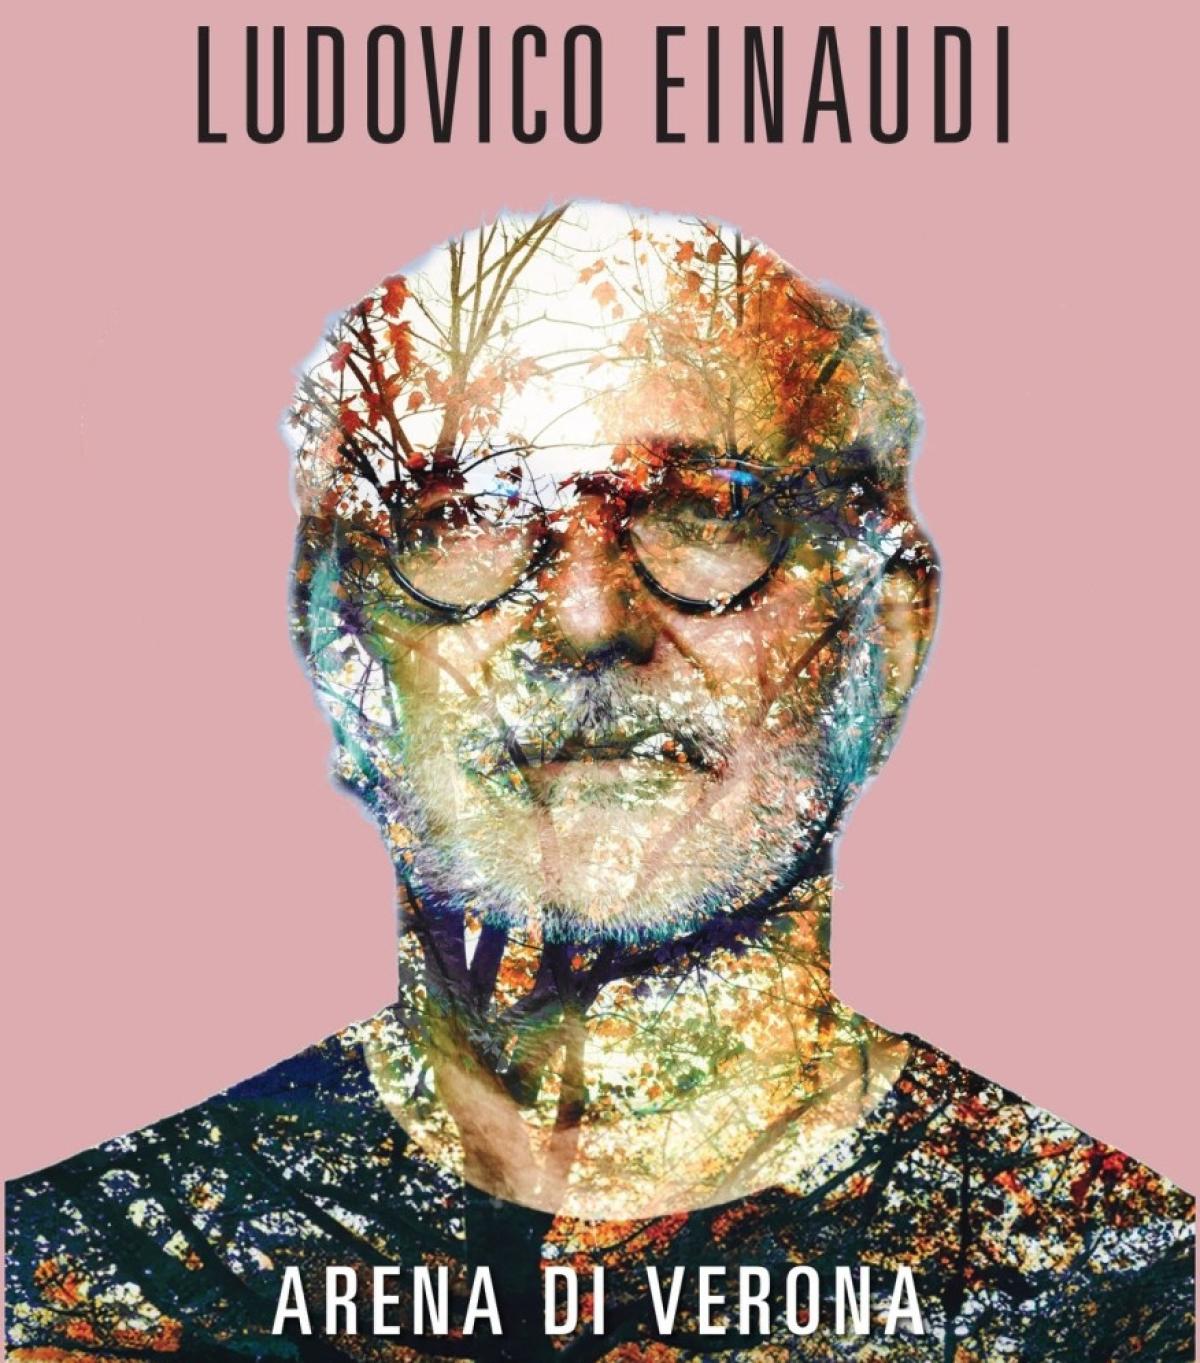 Ludovico Einaudi - In A Time Lapse Reimagined en Arena di Verona Tickets